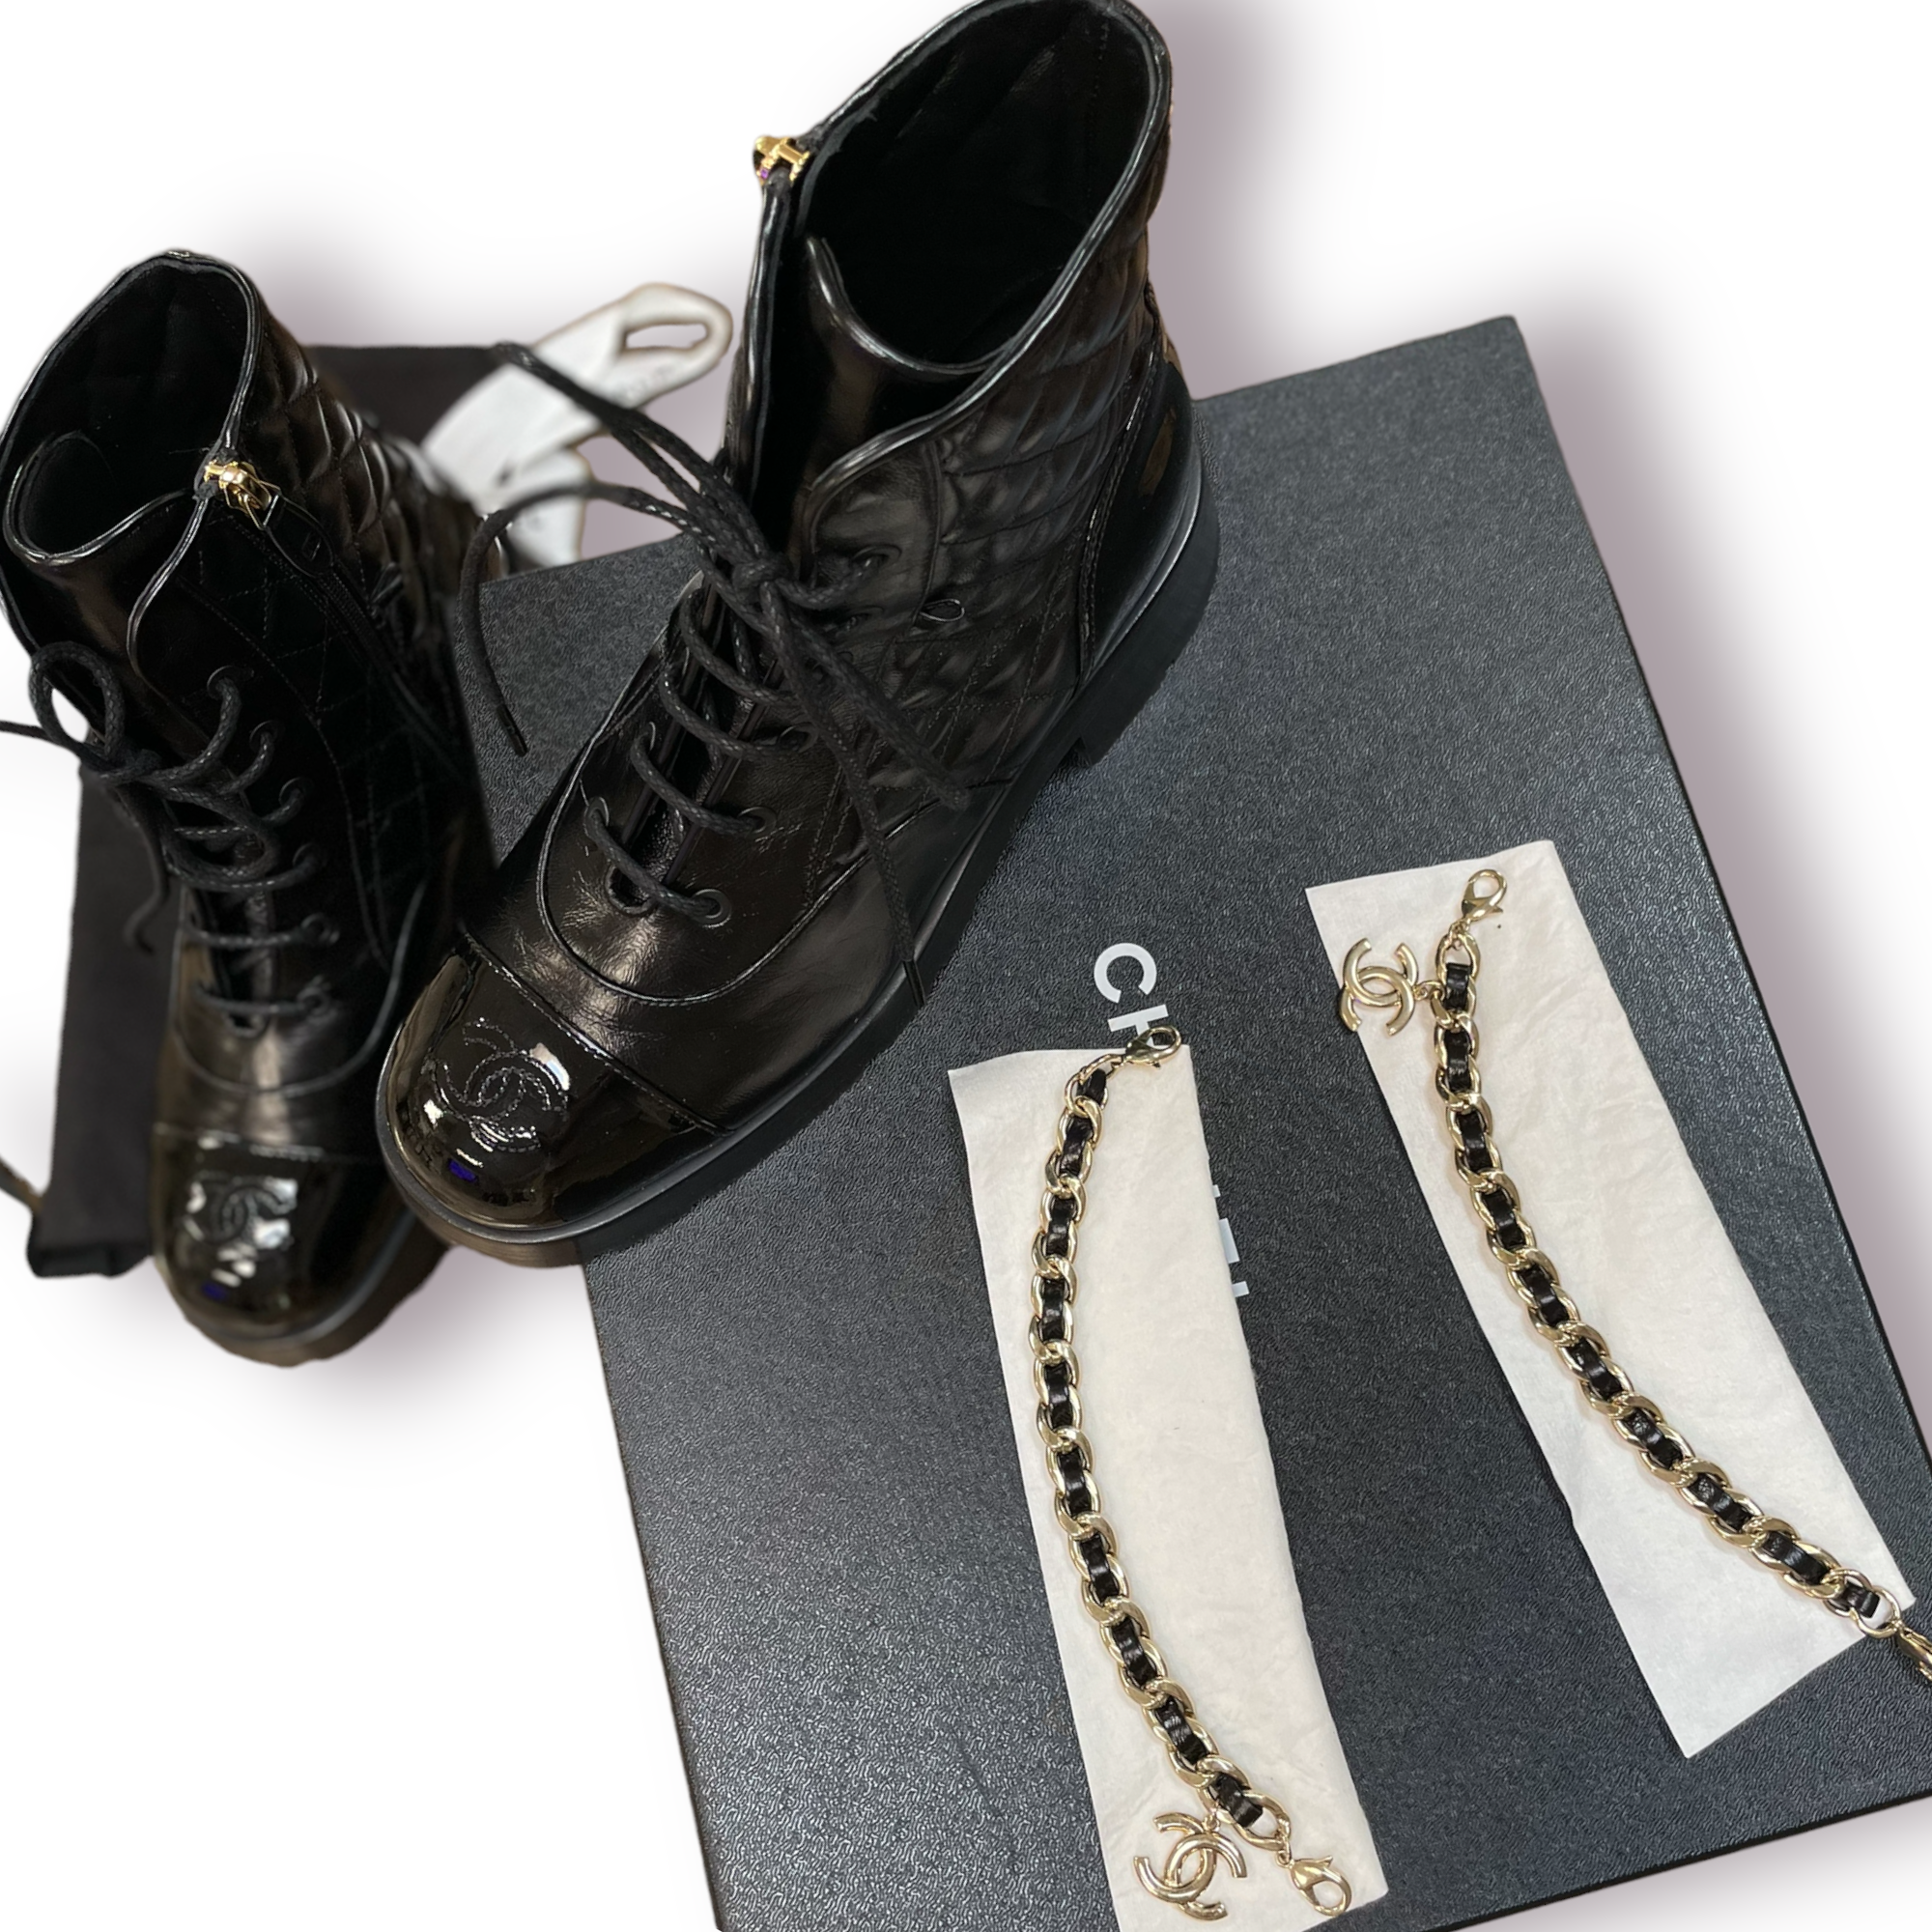 Chanel NIB 2021 Black Lace Ups Combat Boots